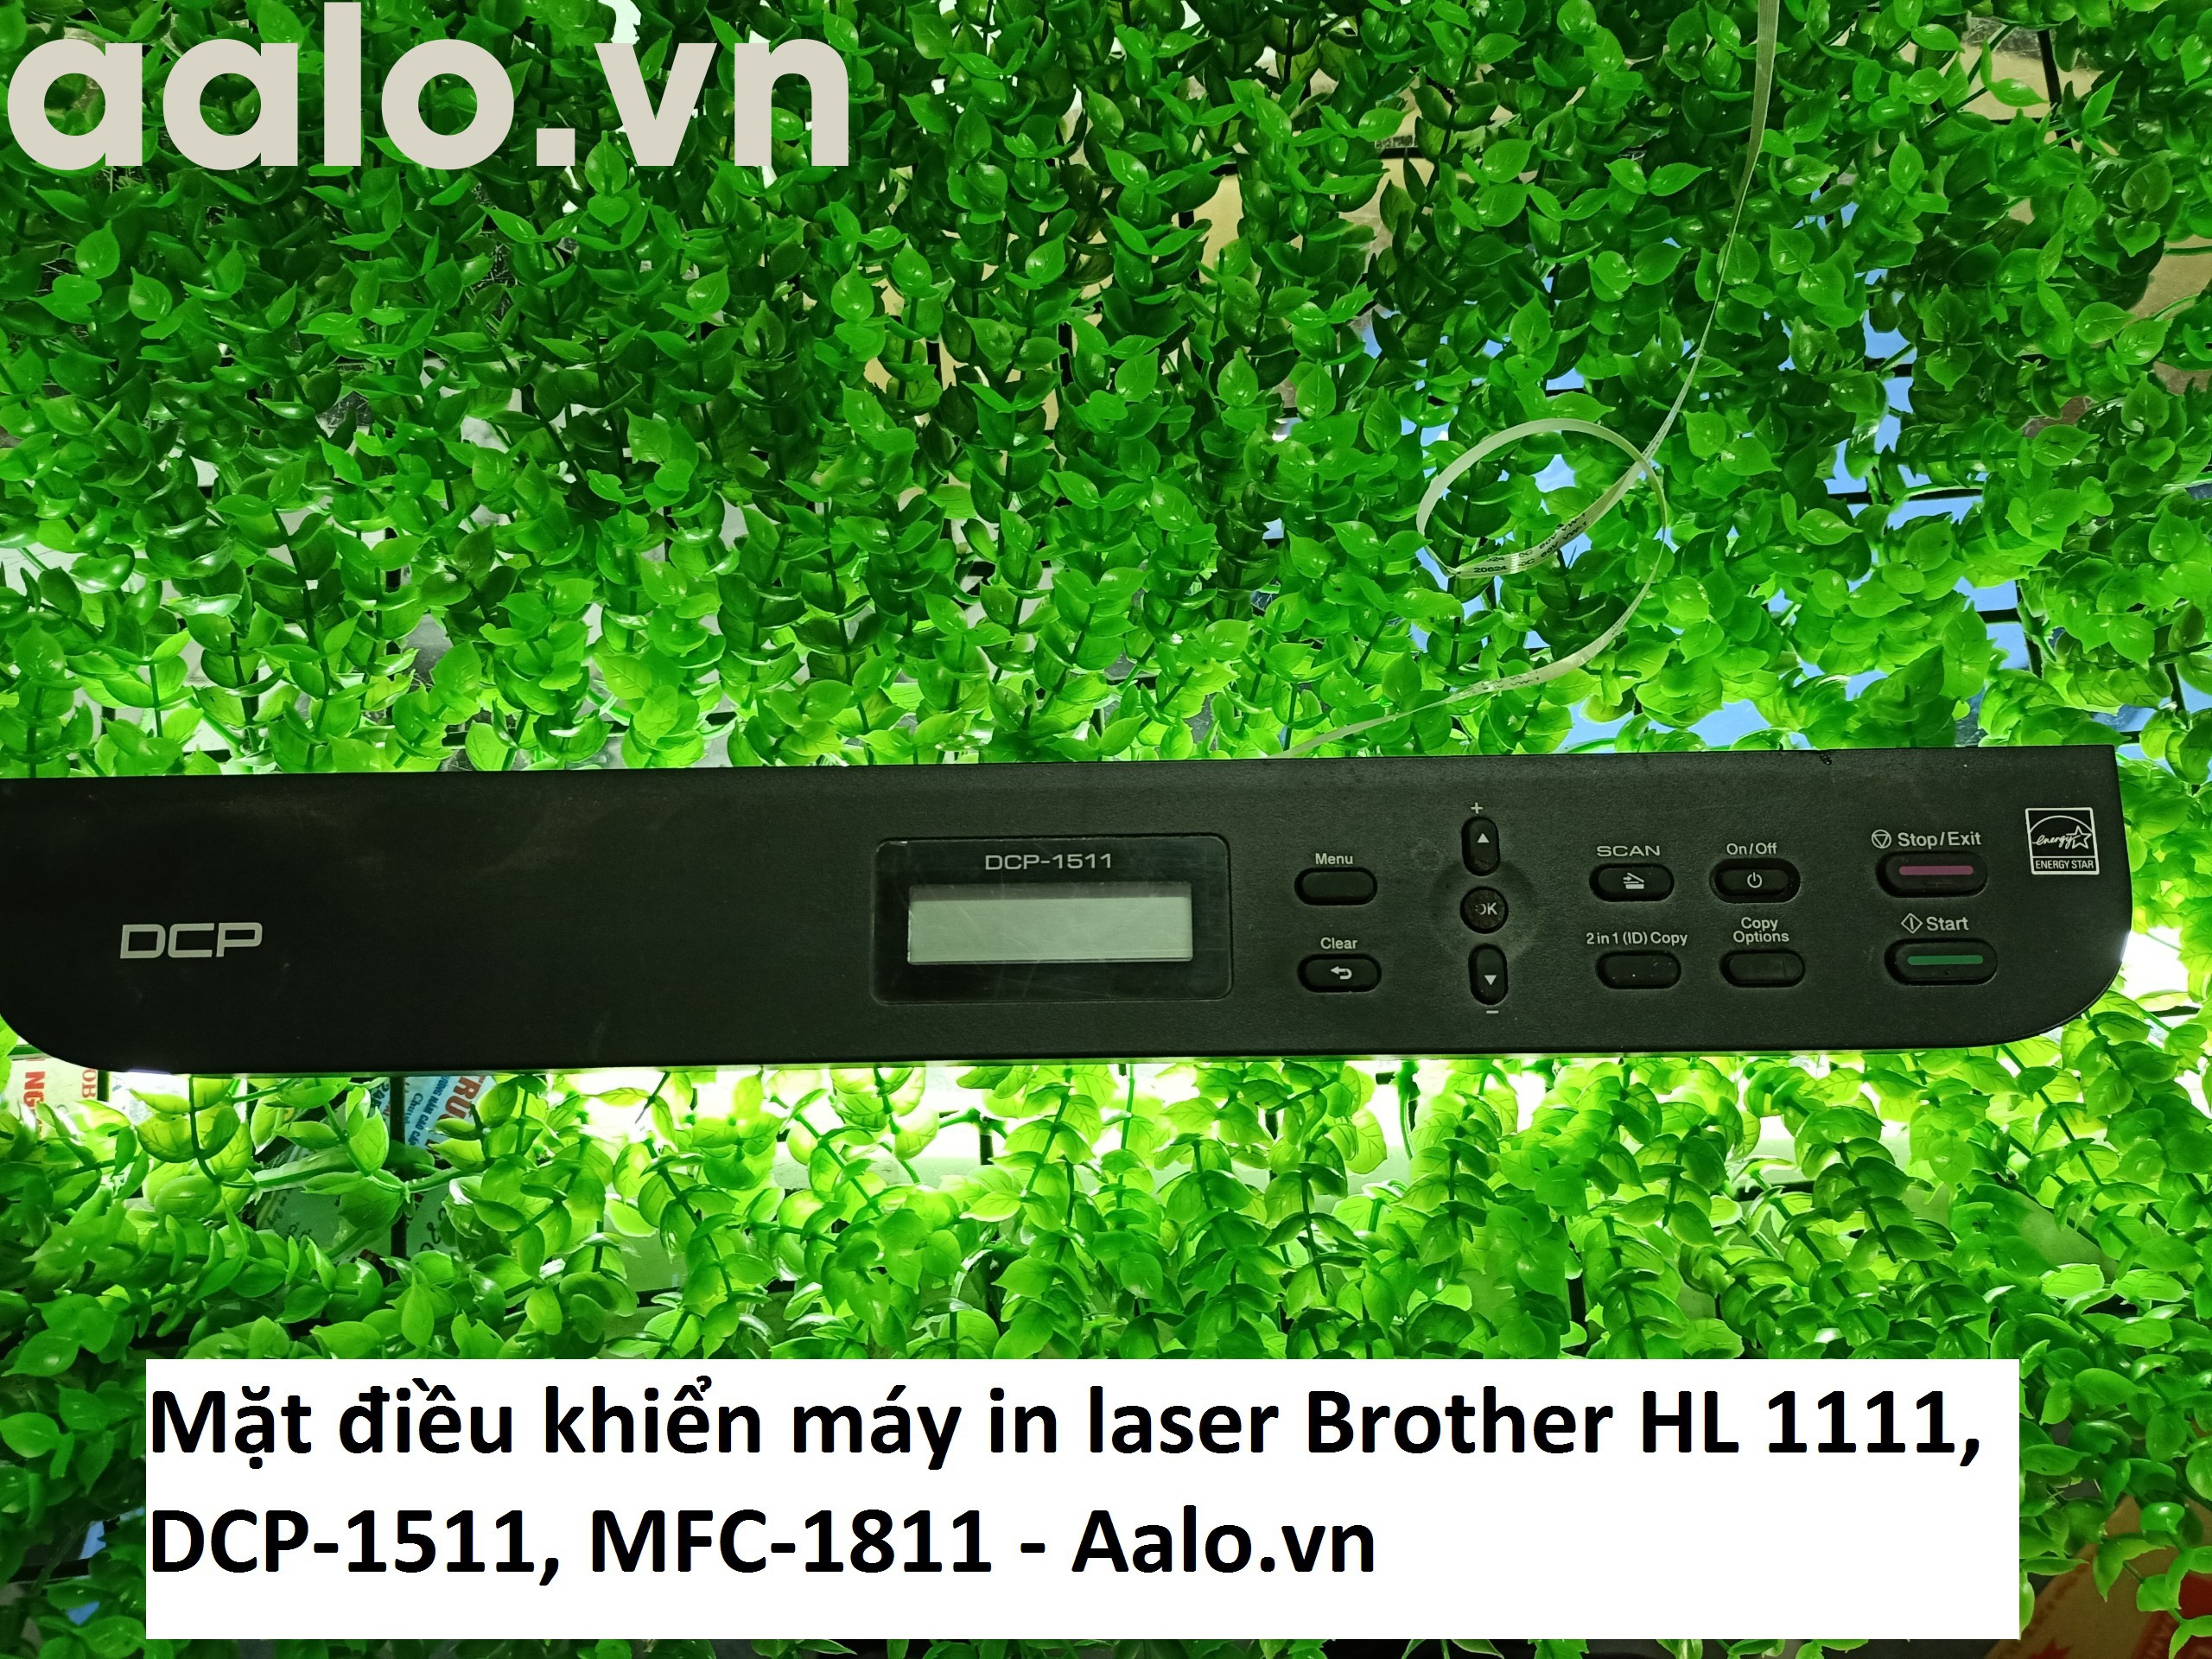 Mặt điều khiển máy in laser Brother HL 1111, DCP-1511, MFC-1811